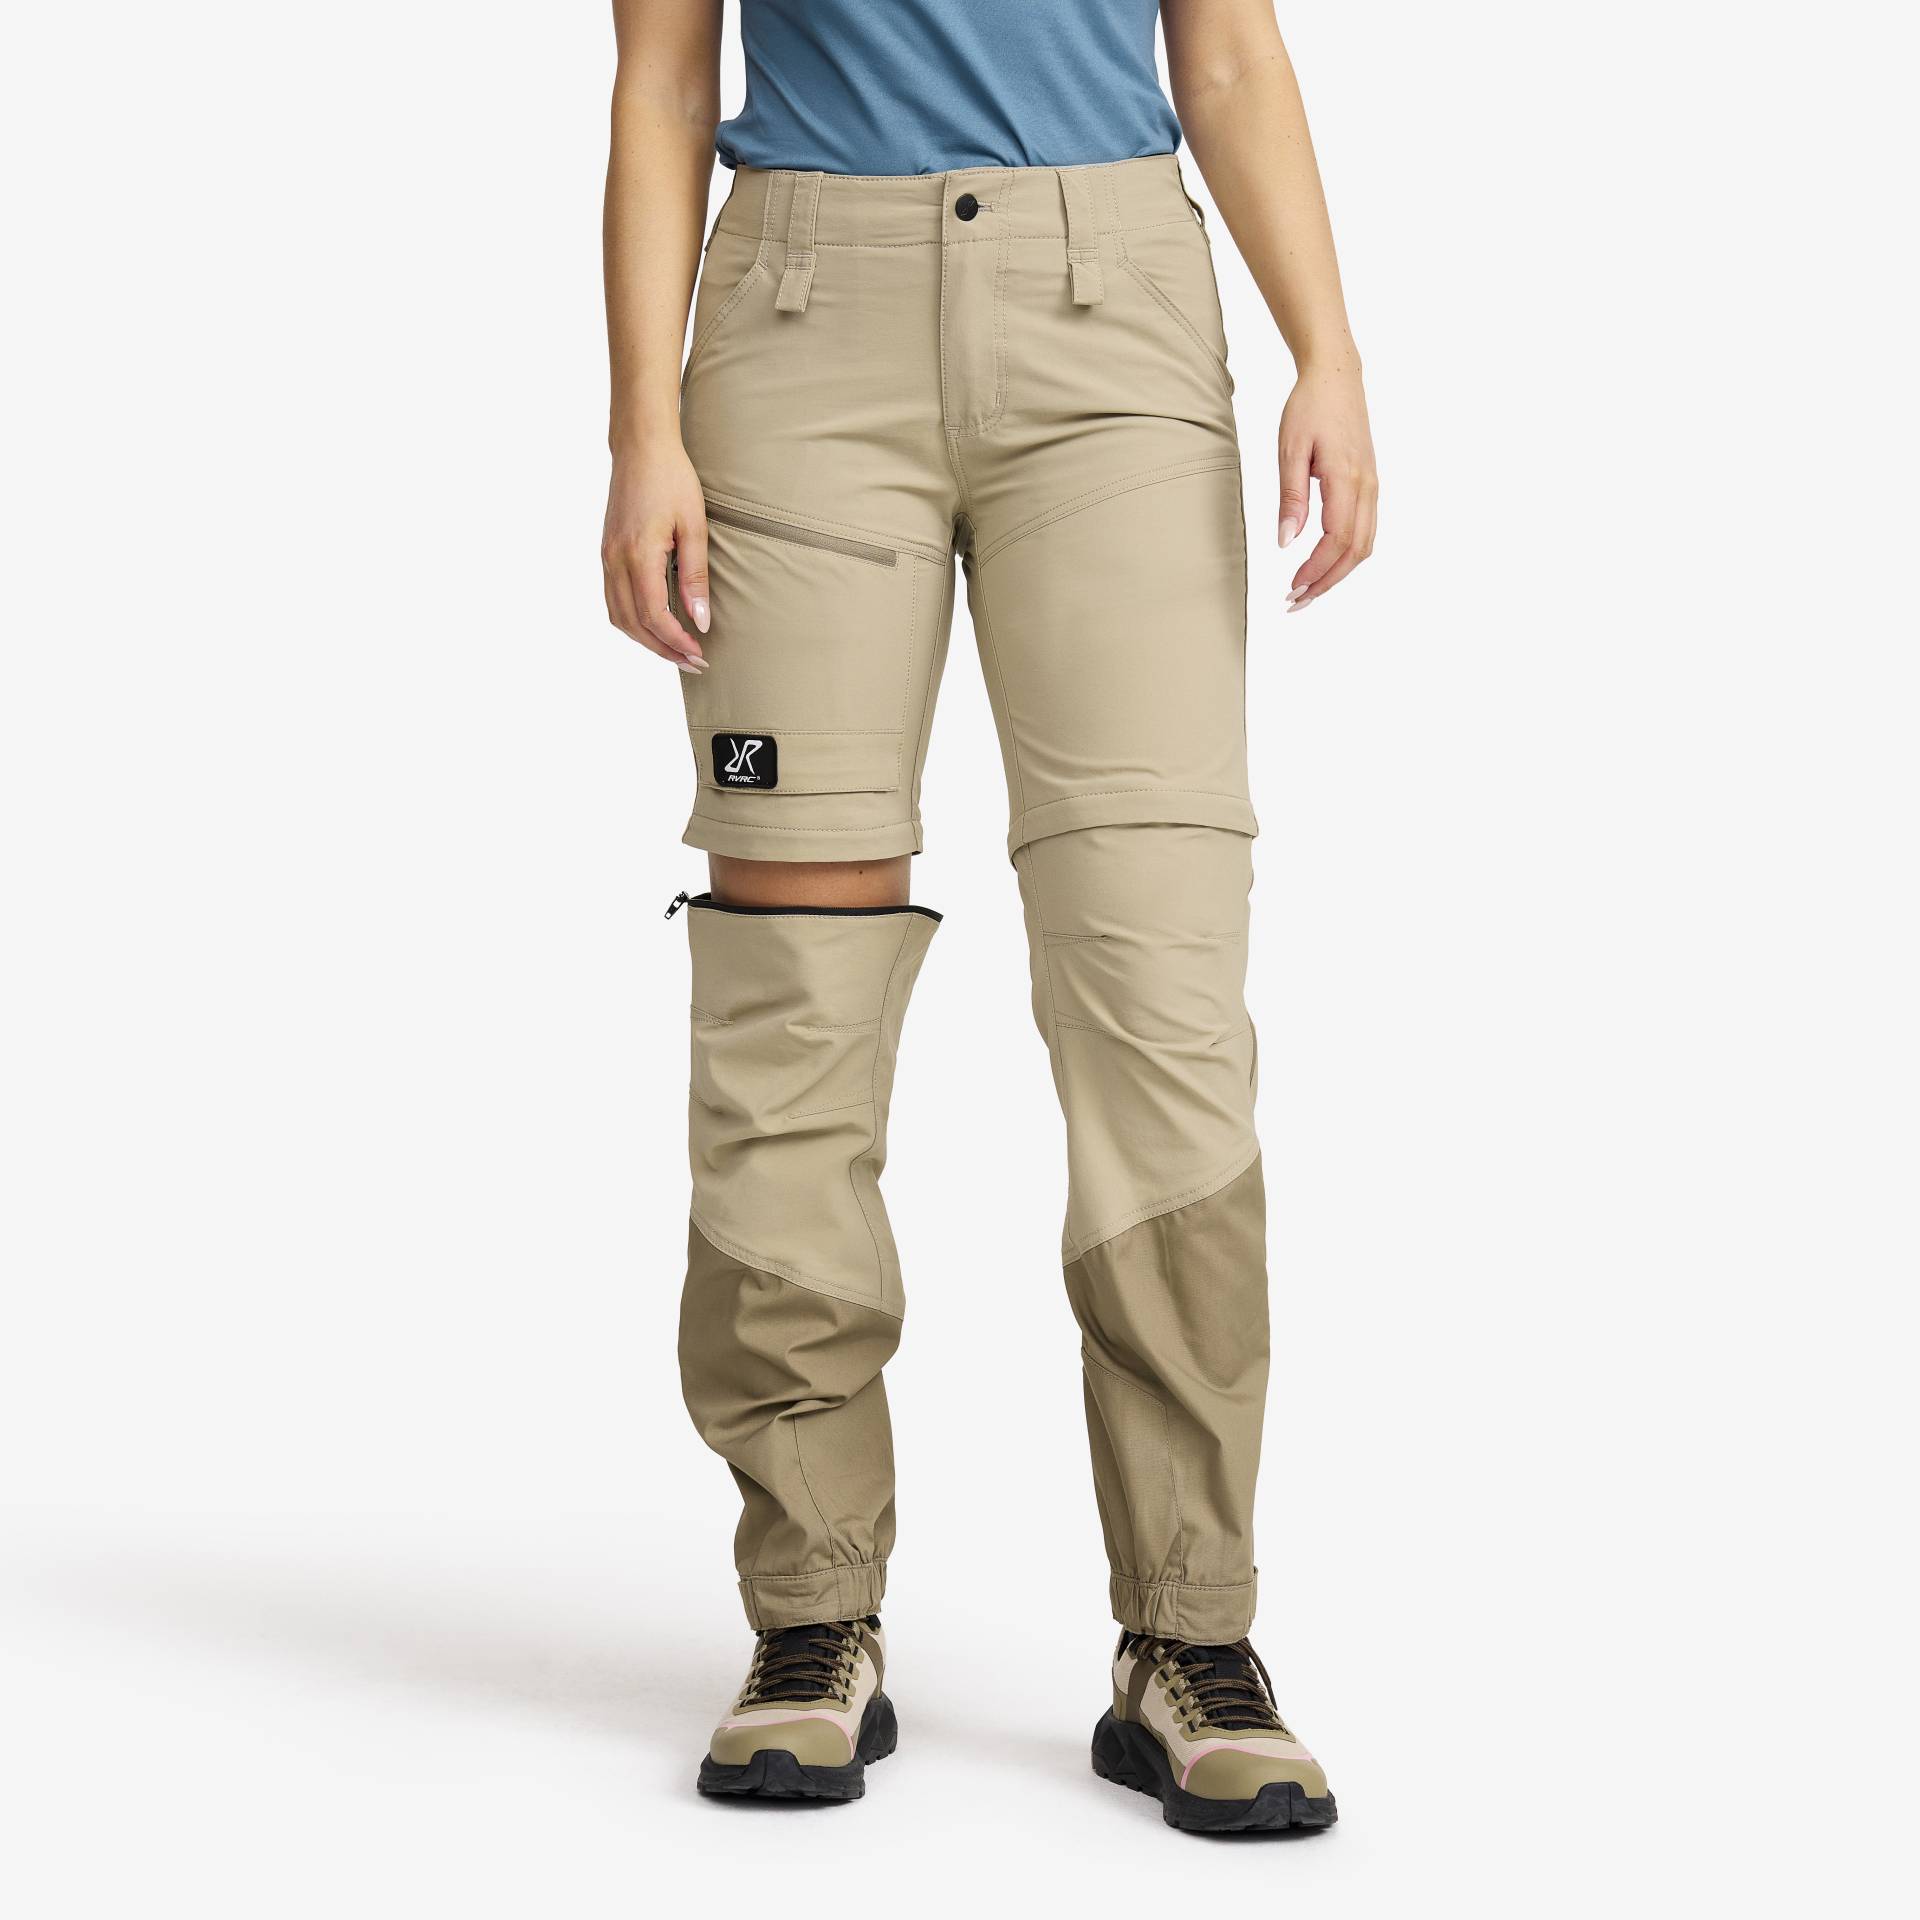 Range Pro Zip-off Pants Damen Aluminium/Brindle, Größe:S - Zip-off-hosen von RevolutionRace